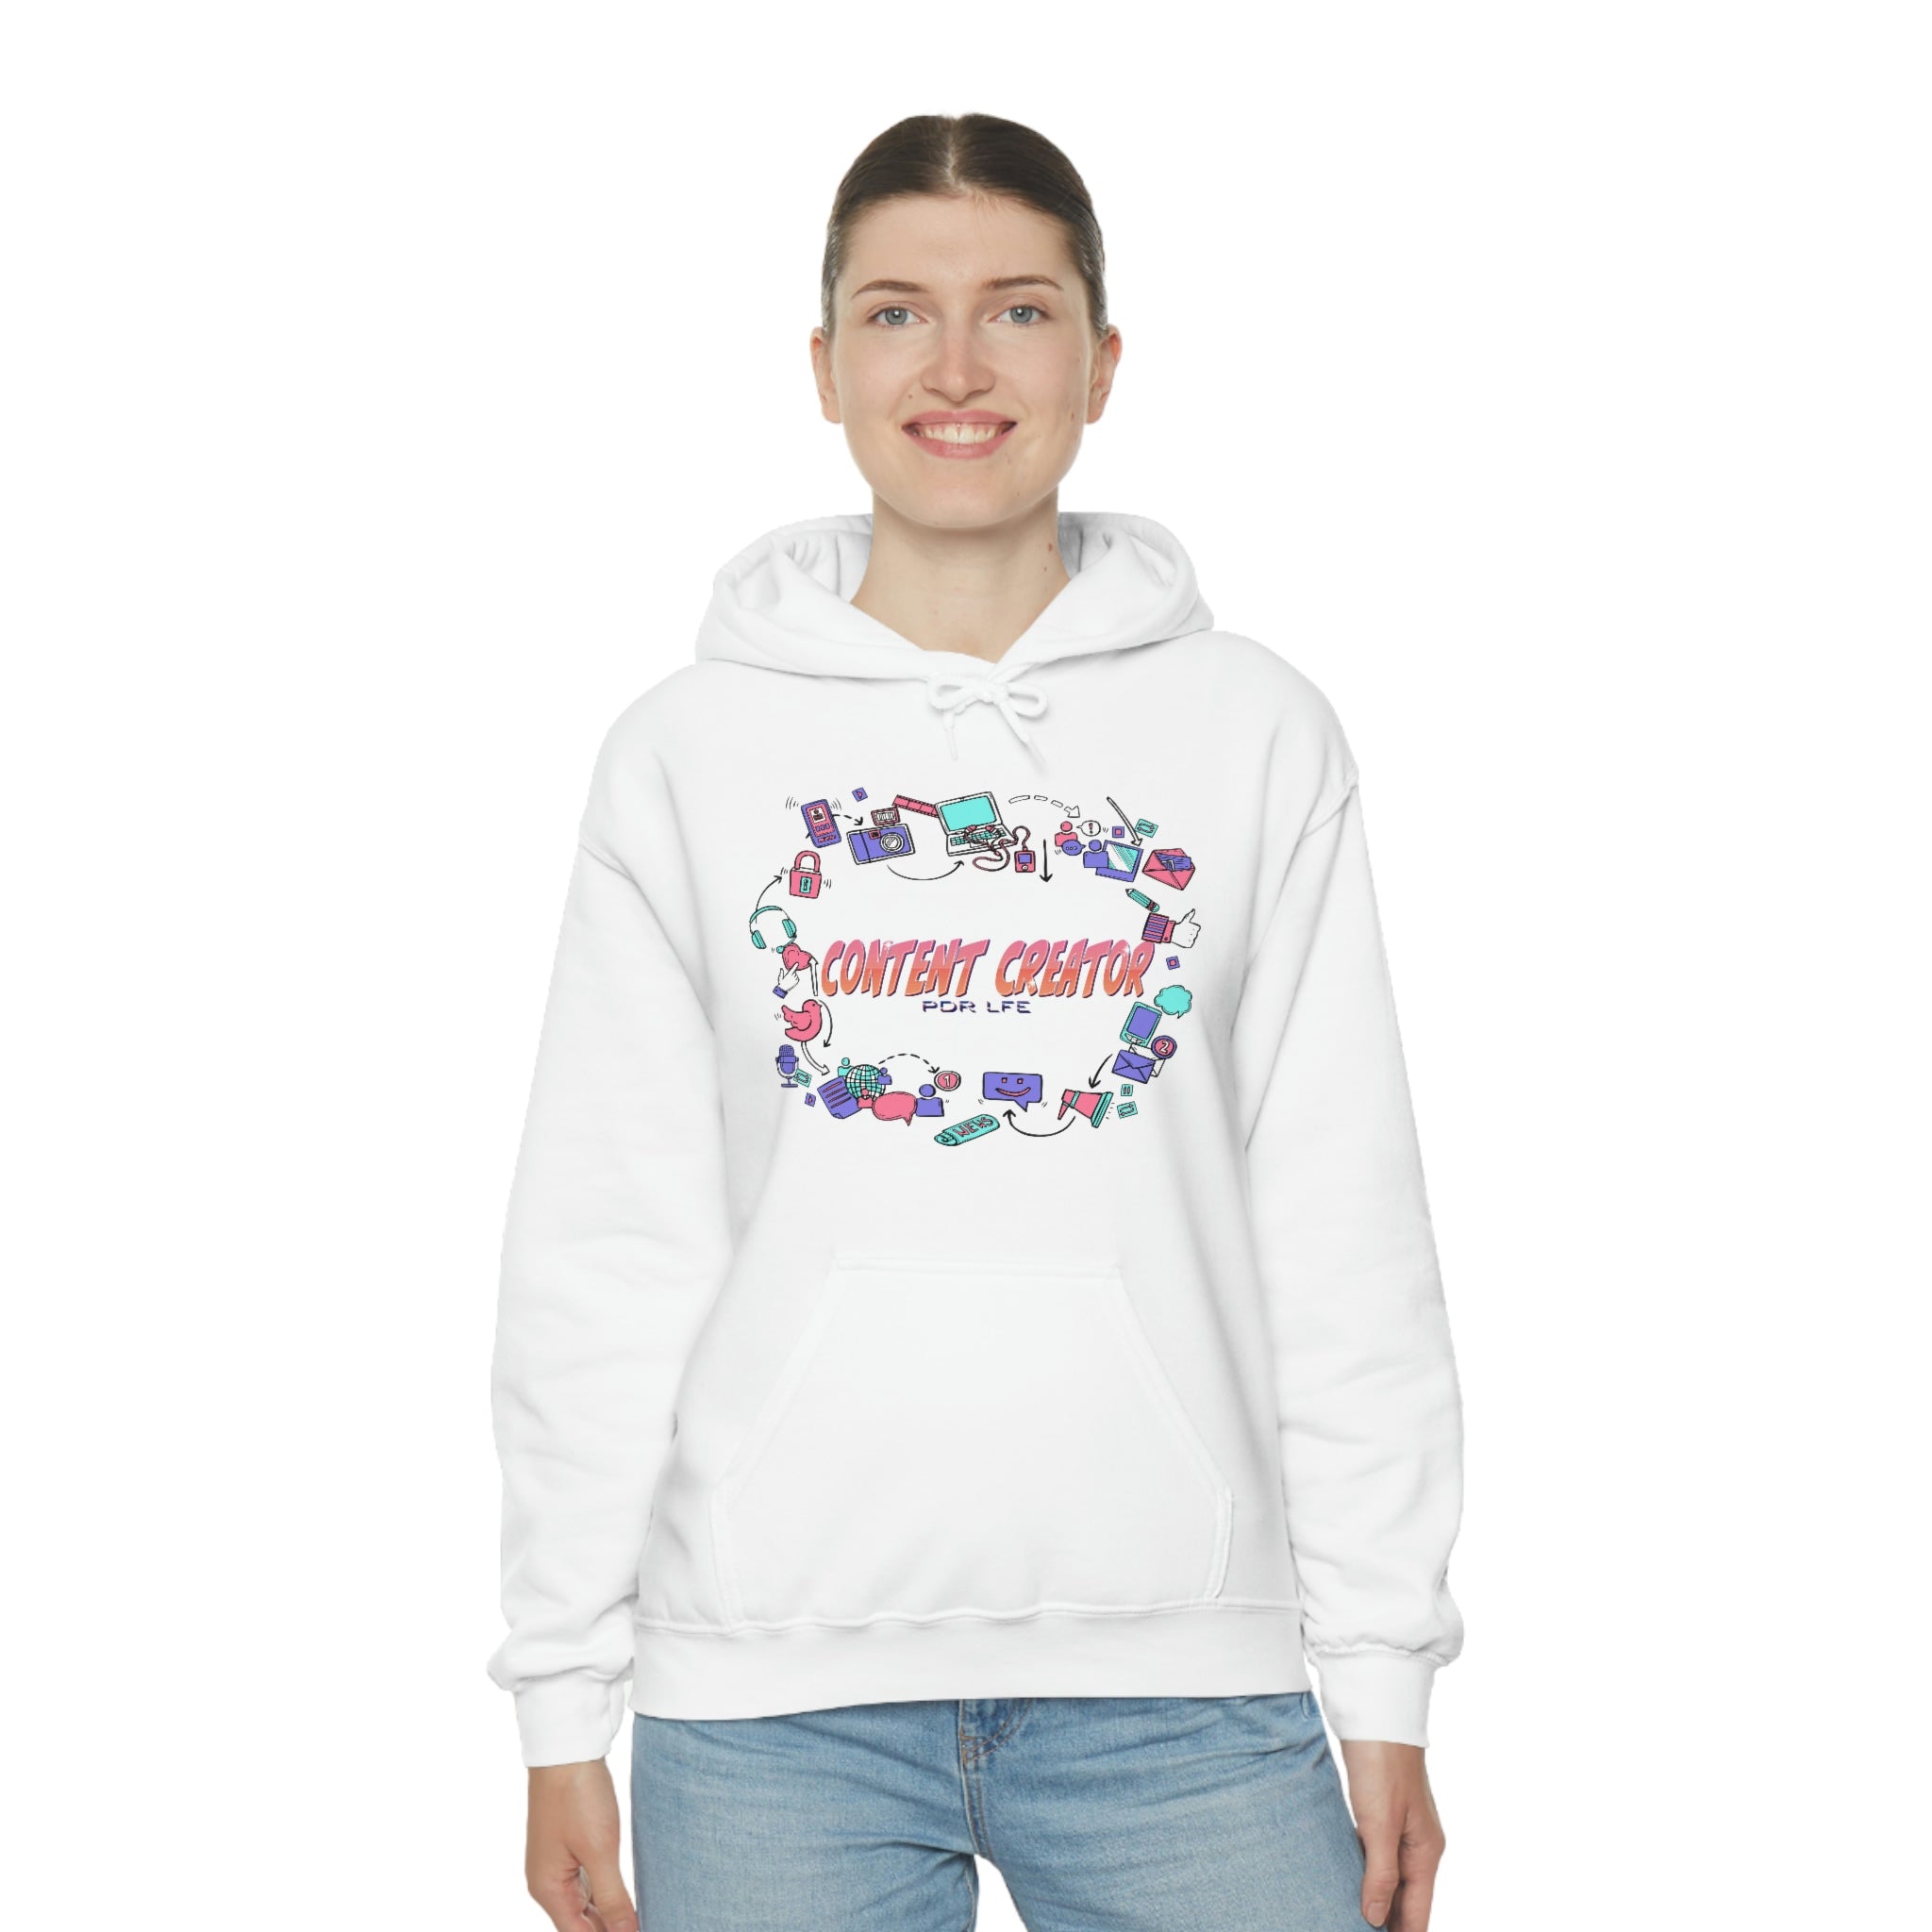 CONTENT CREATOR Heavy Blend™ Female Hooded Sweatshirt - PDR L.F.E. 